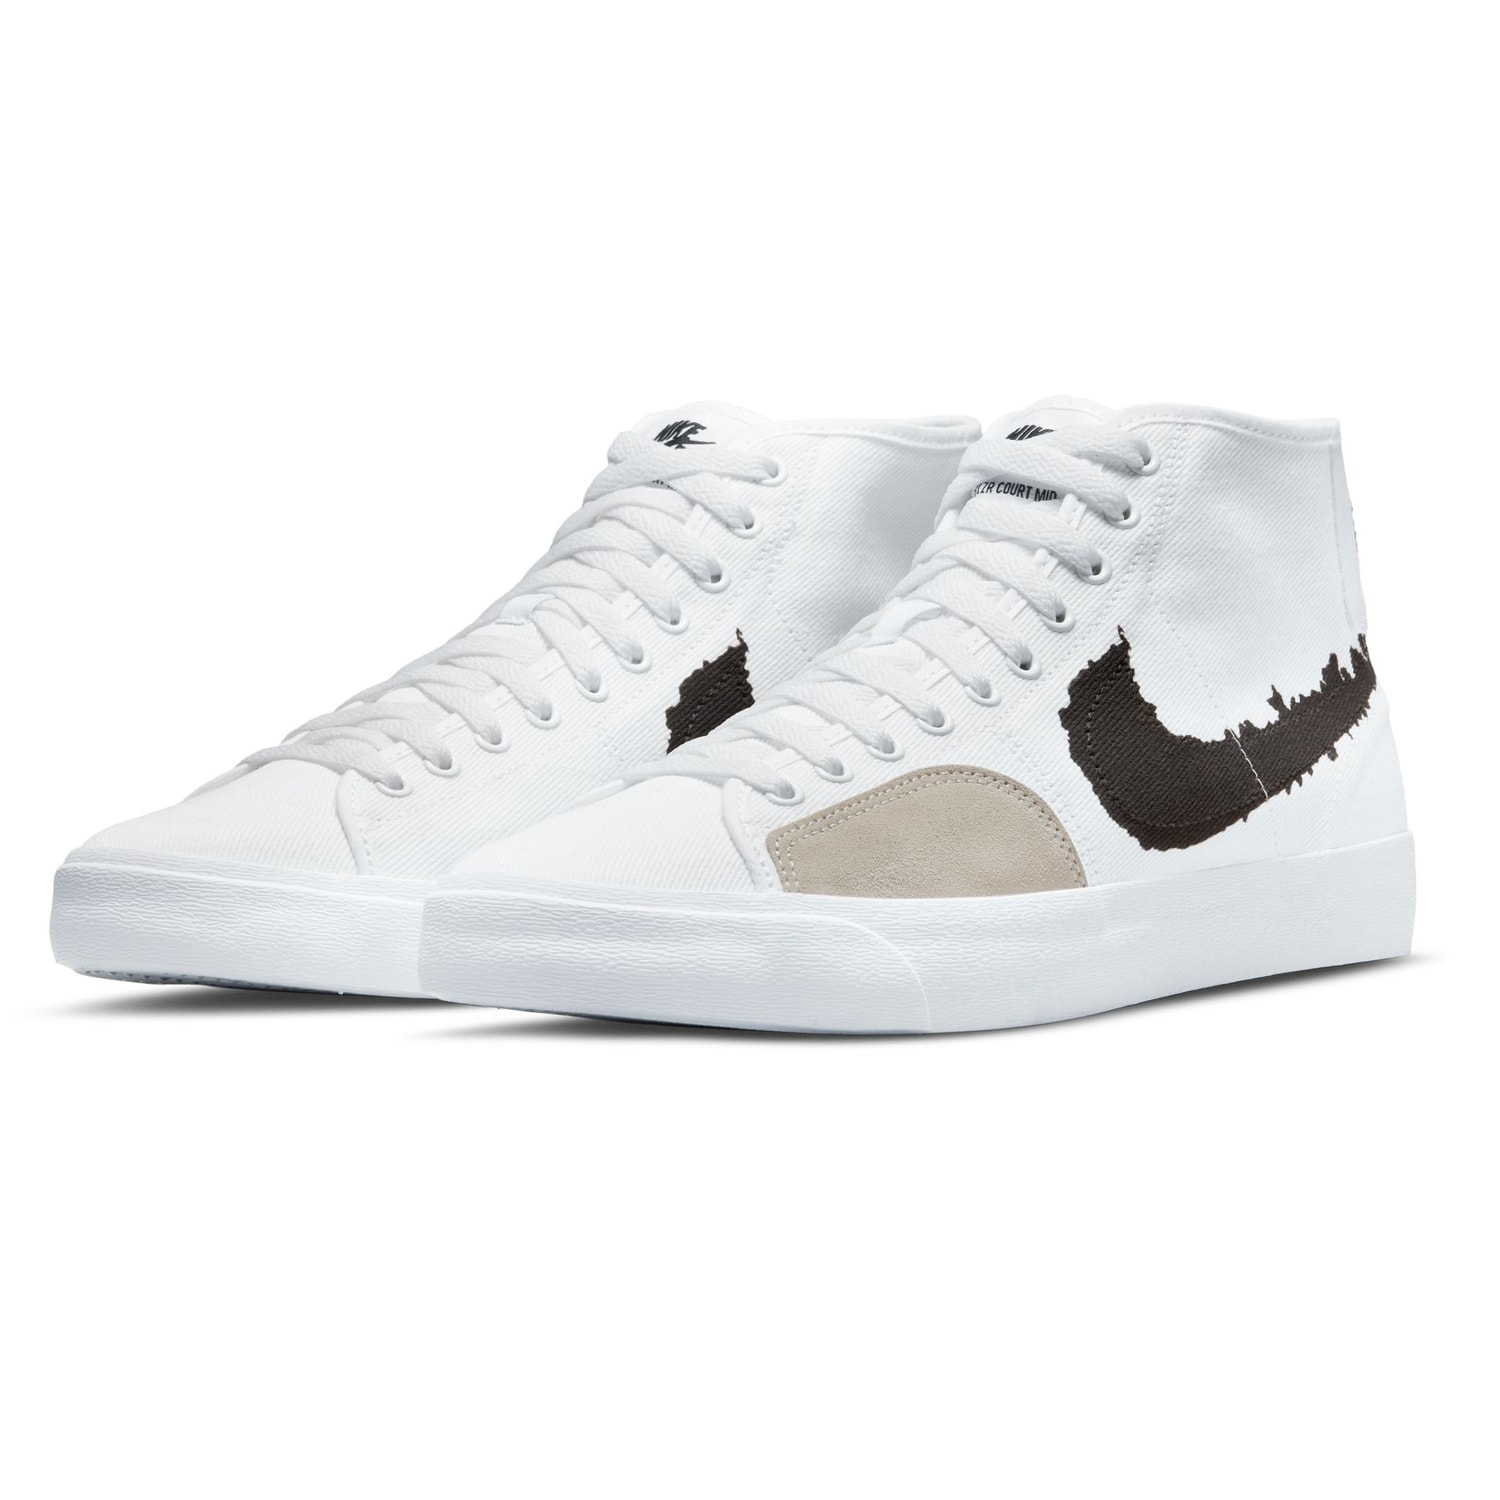 Nike SB Blazer Court Mid Premium white/black-white UK 9 (EUR 44) 22